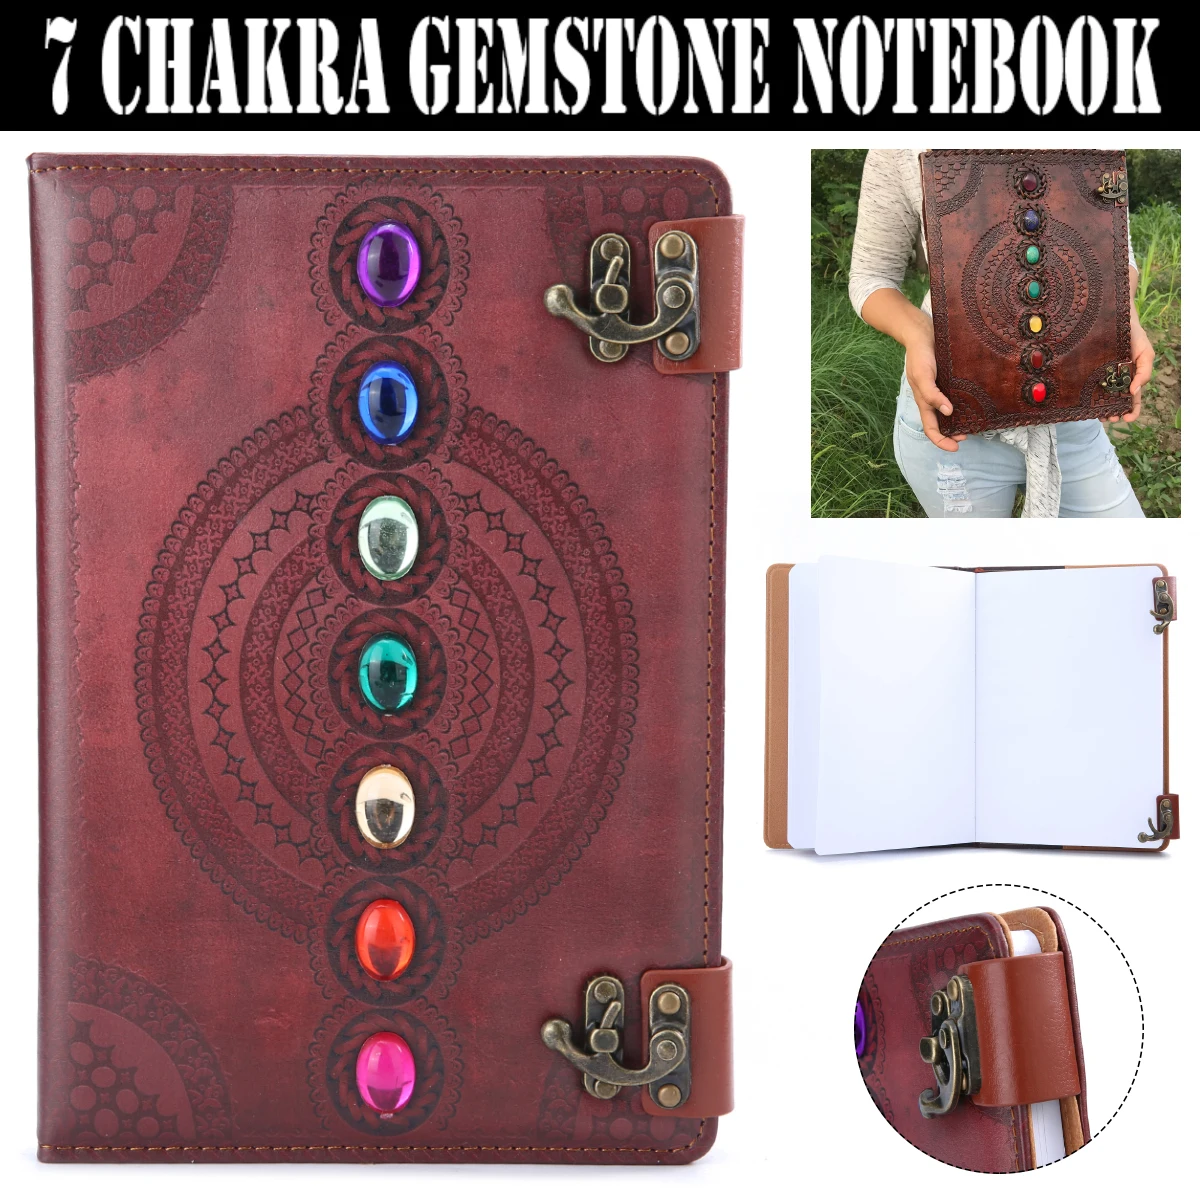 

100 Sheet 7 Chakra Gemstone Journal Notepads Daily Memos Book Writing Painting Paper Traveler Sketch Notebook